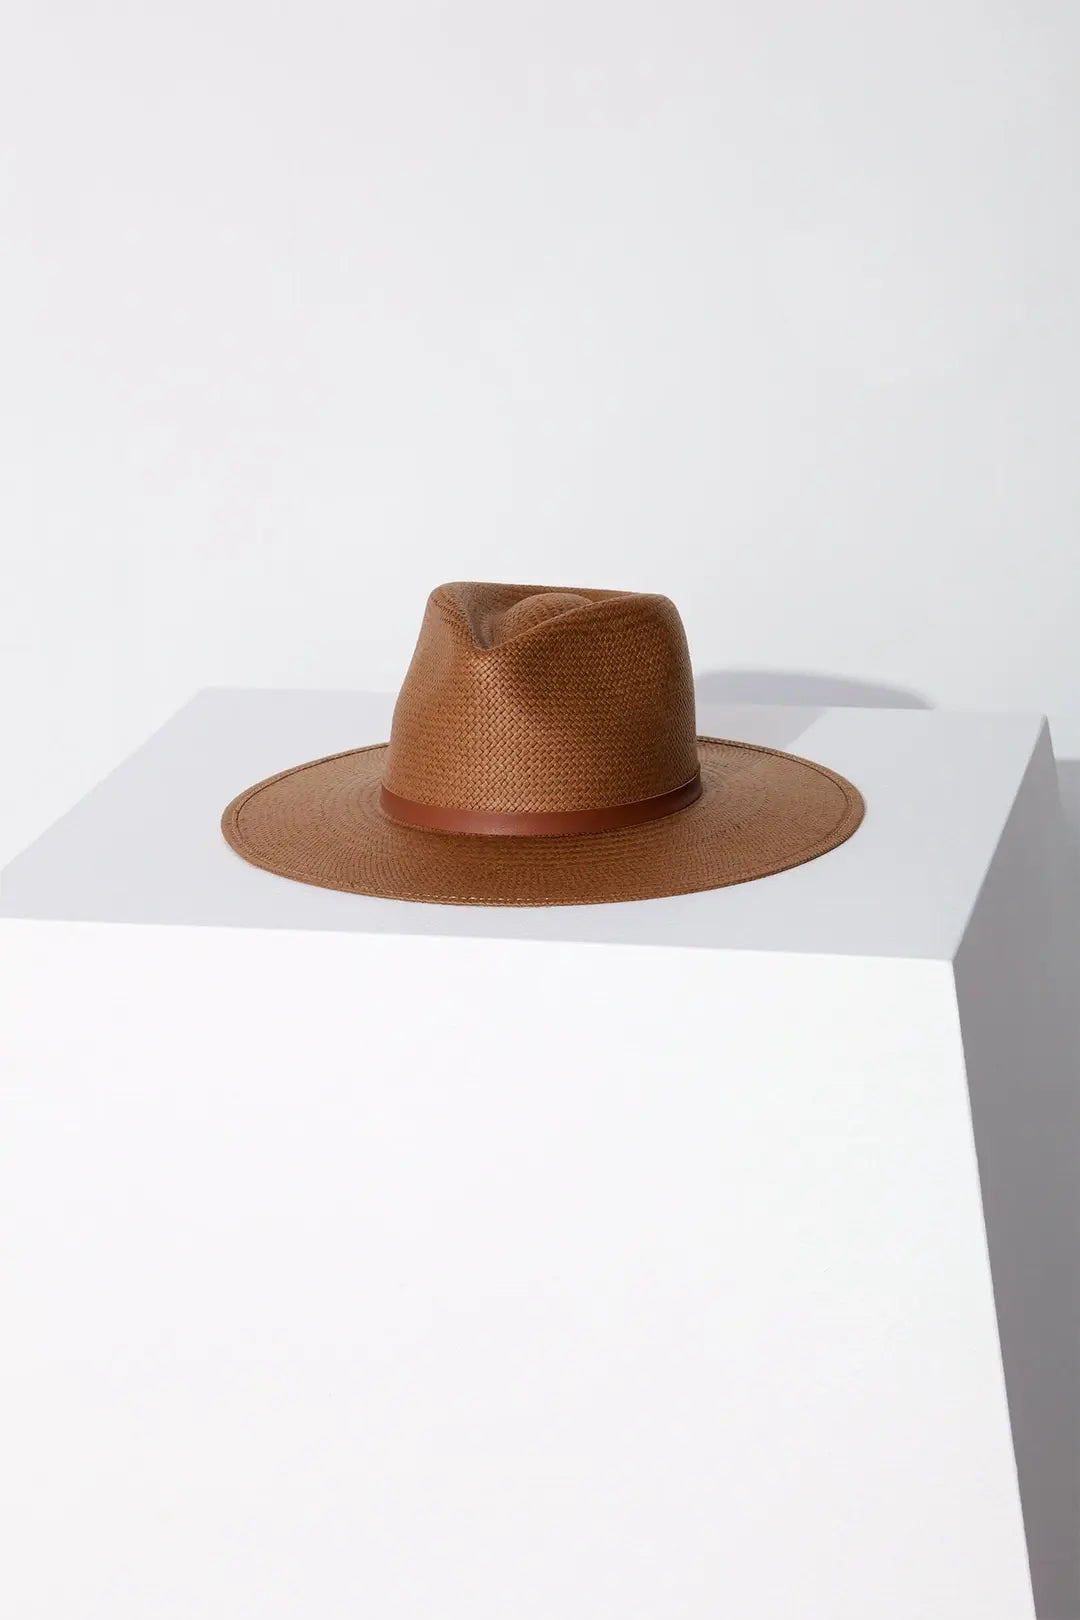 Janessa Leone | Sherman Hat